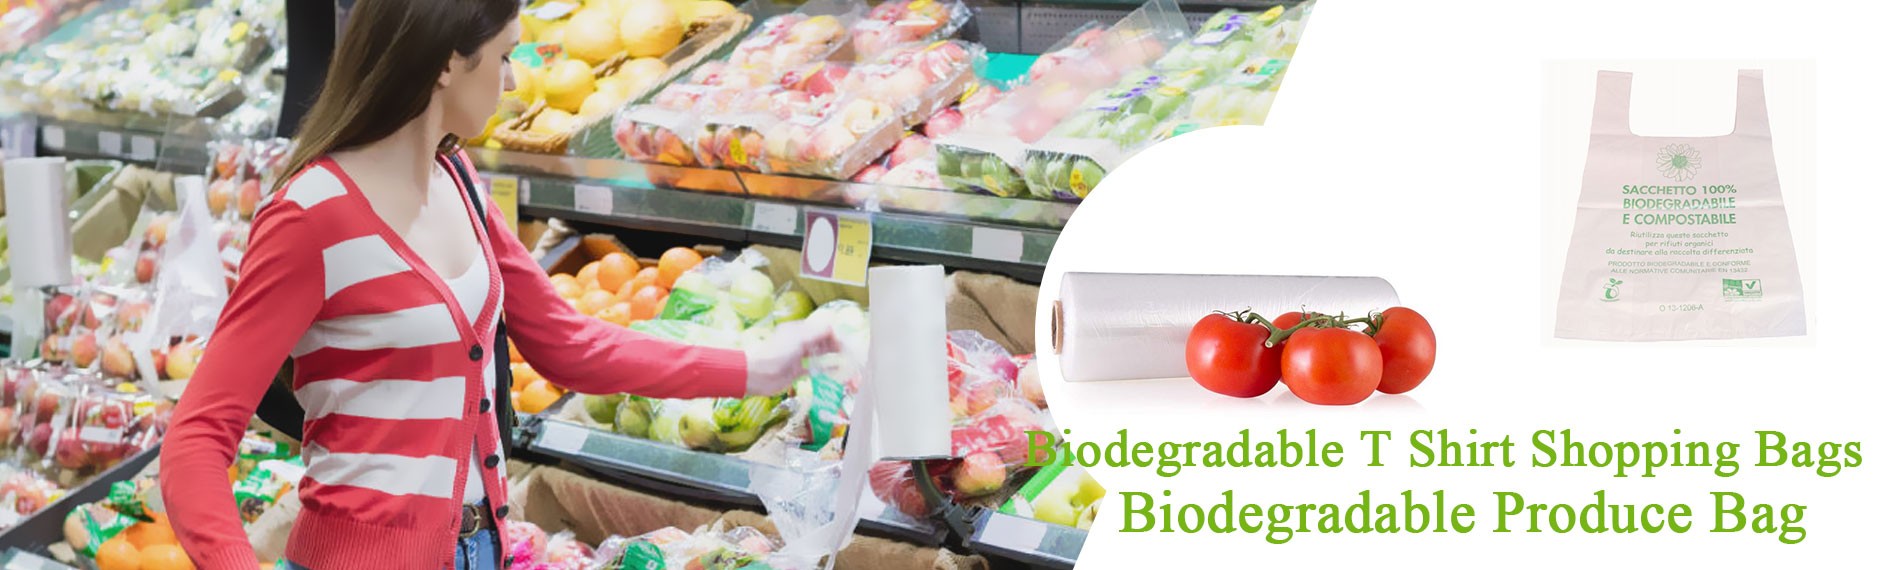 Biodegradable T Shirt Shopping Bags